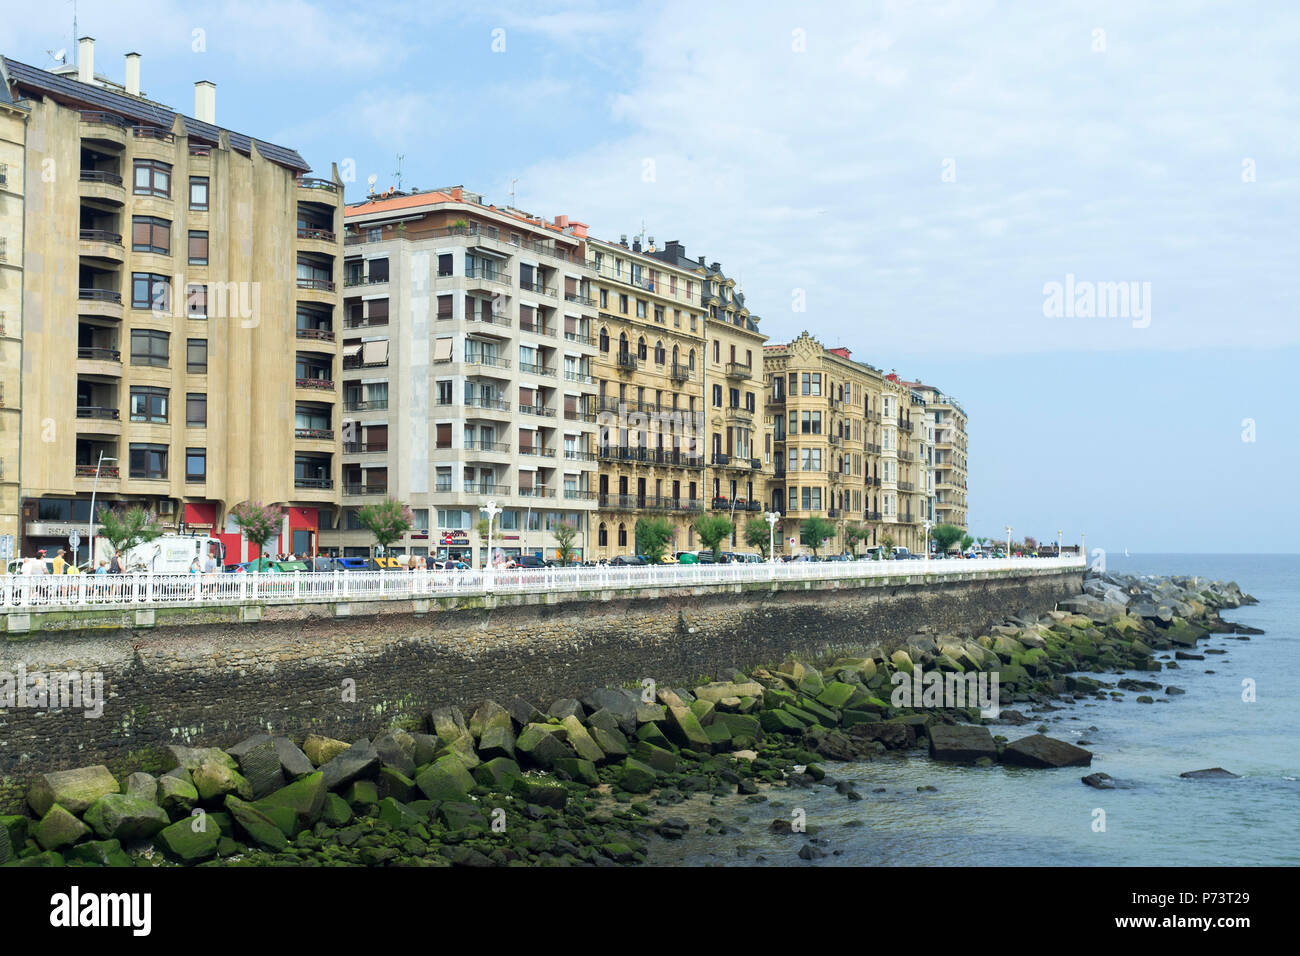 Pictures of Donostia / San Sebastián Basque Country 2018, playa de ondarreta and playa concha and beaches Stock Photo